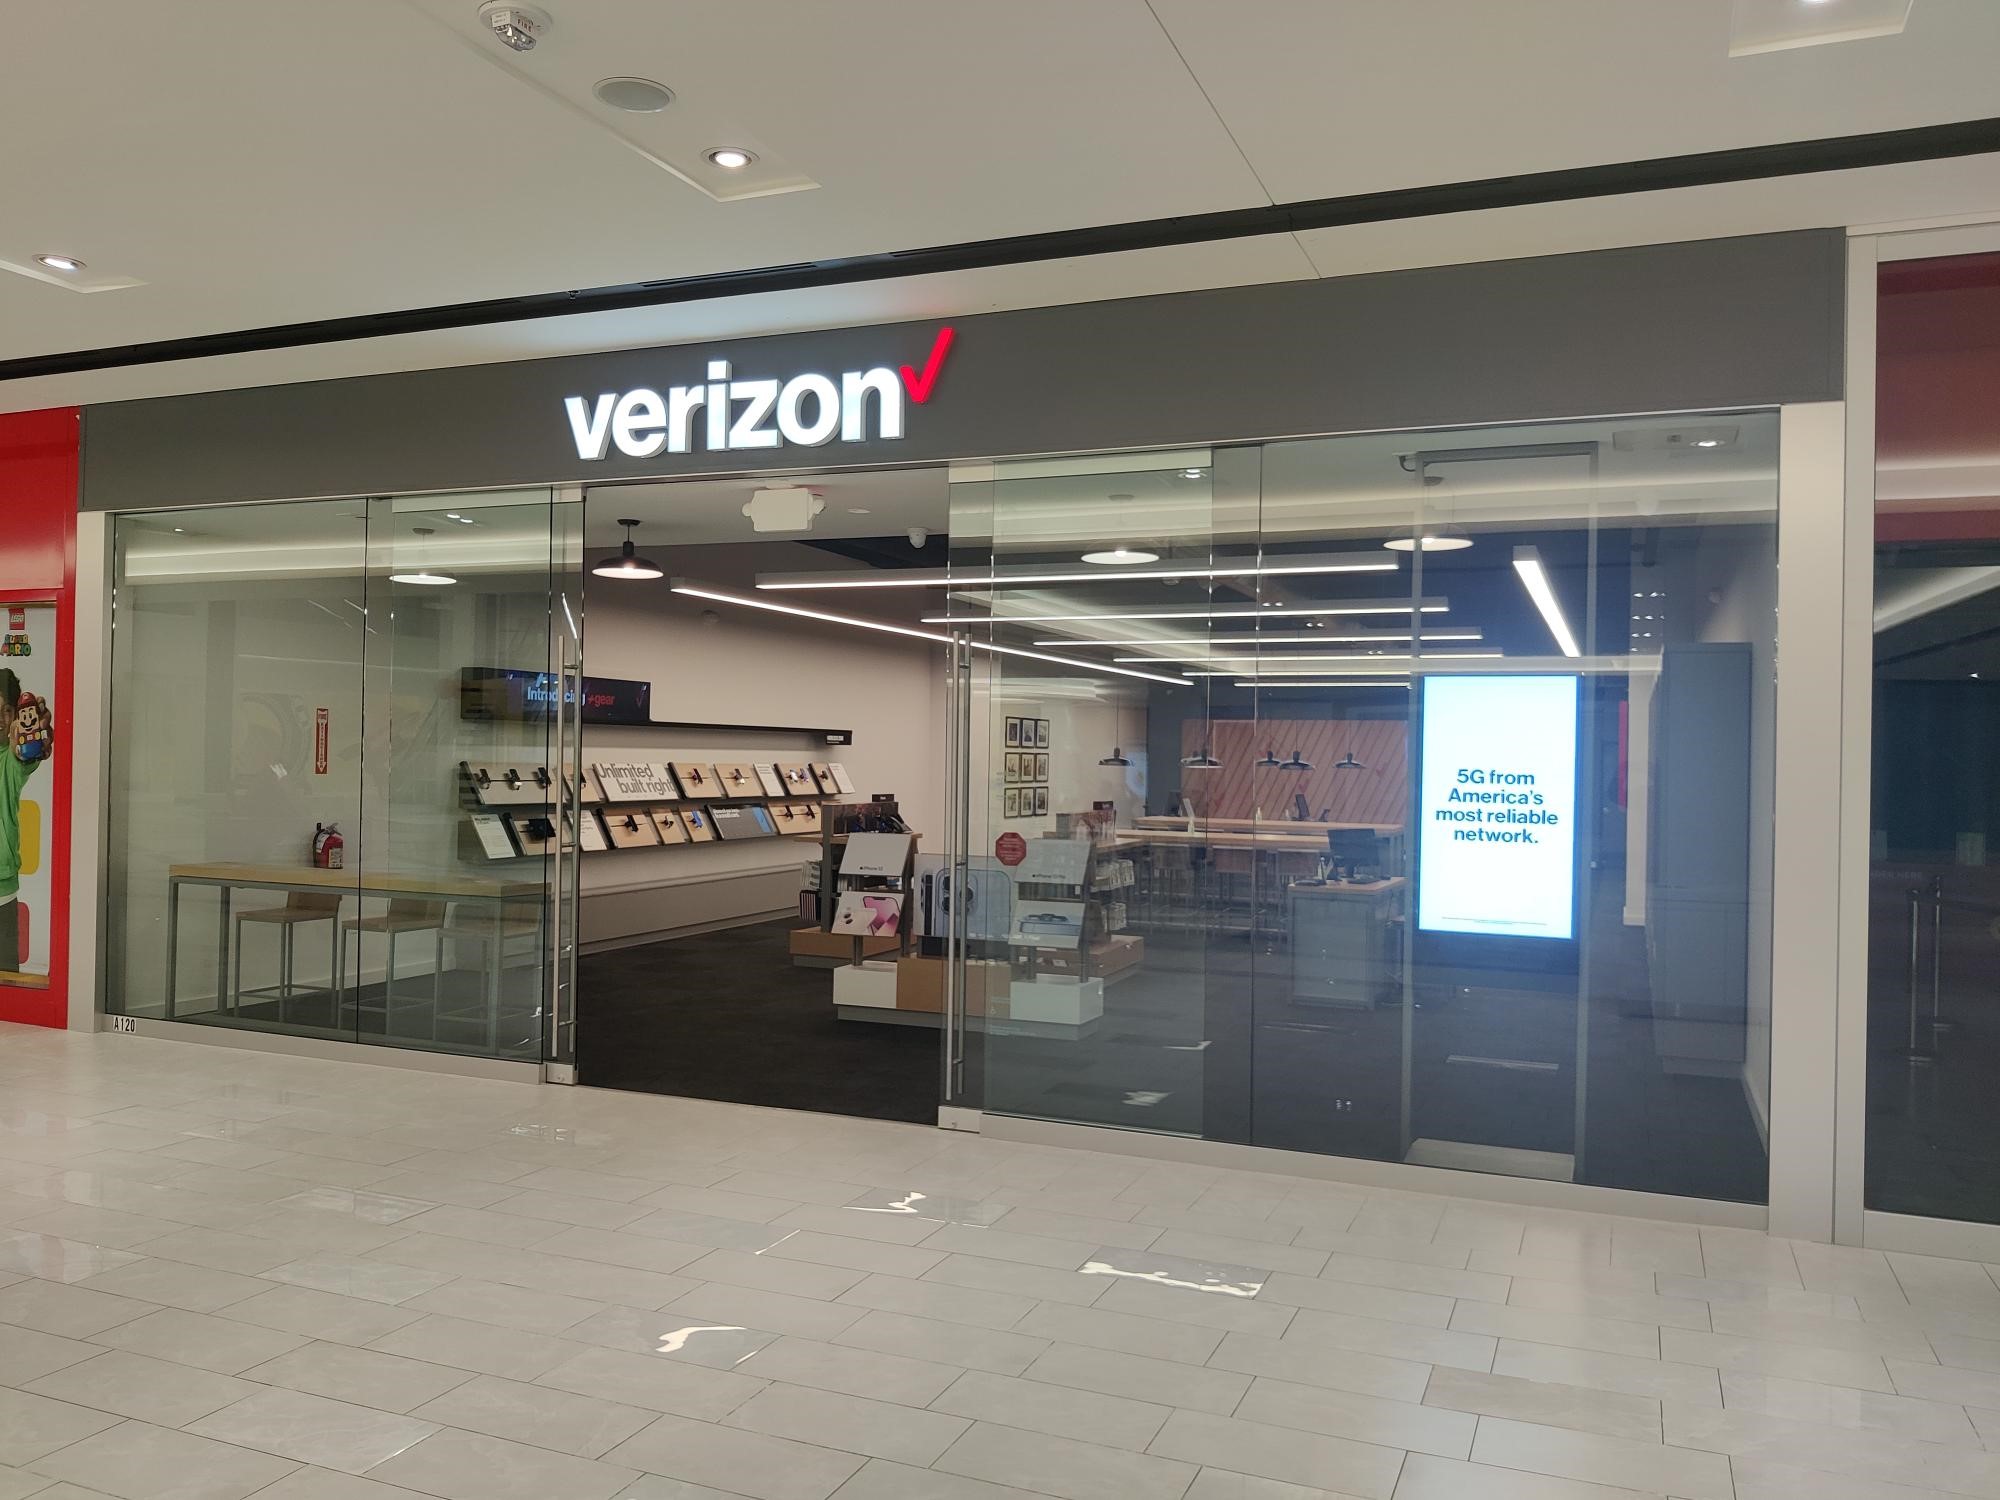 Wireless Zone, Verizon Authorized Retailer
1 American Dream Way
East Rutherford, NJ